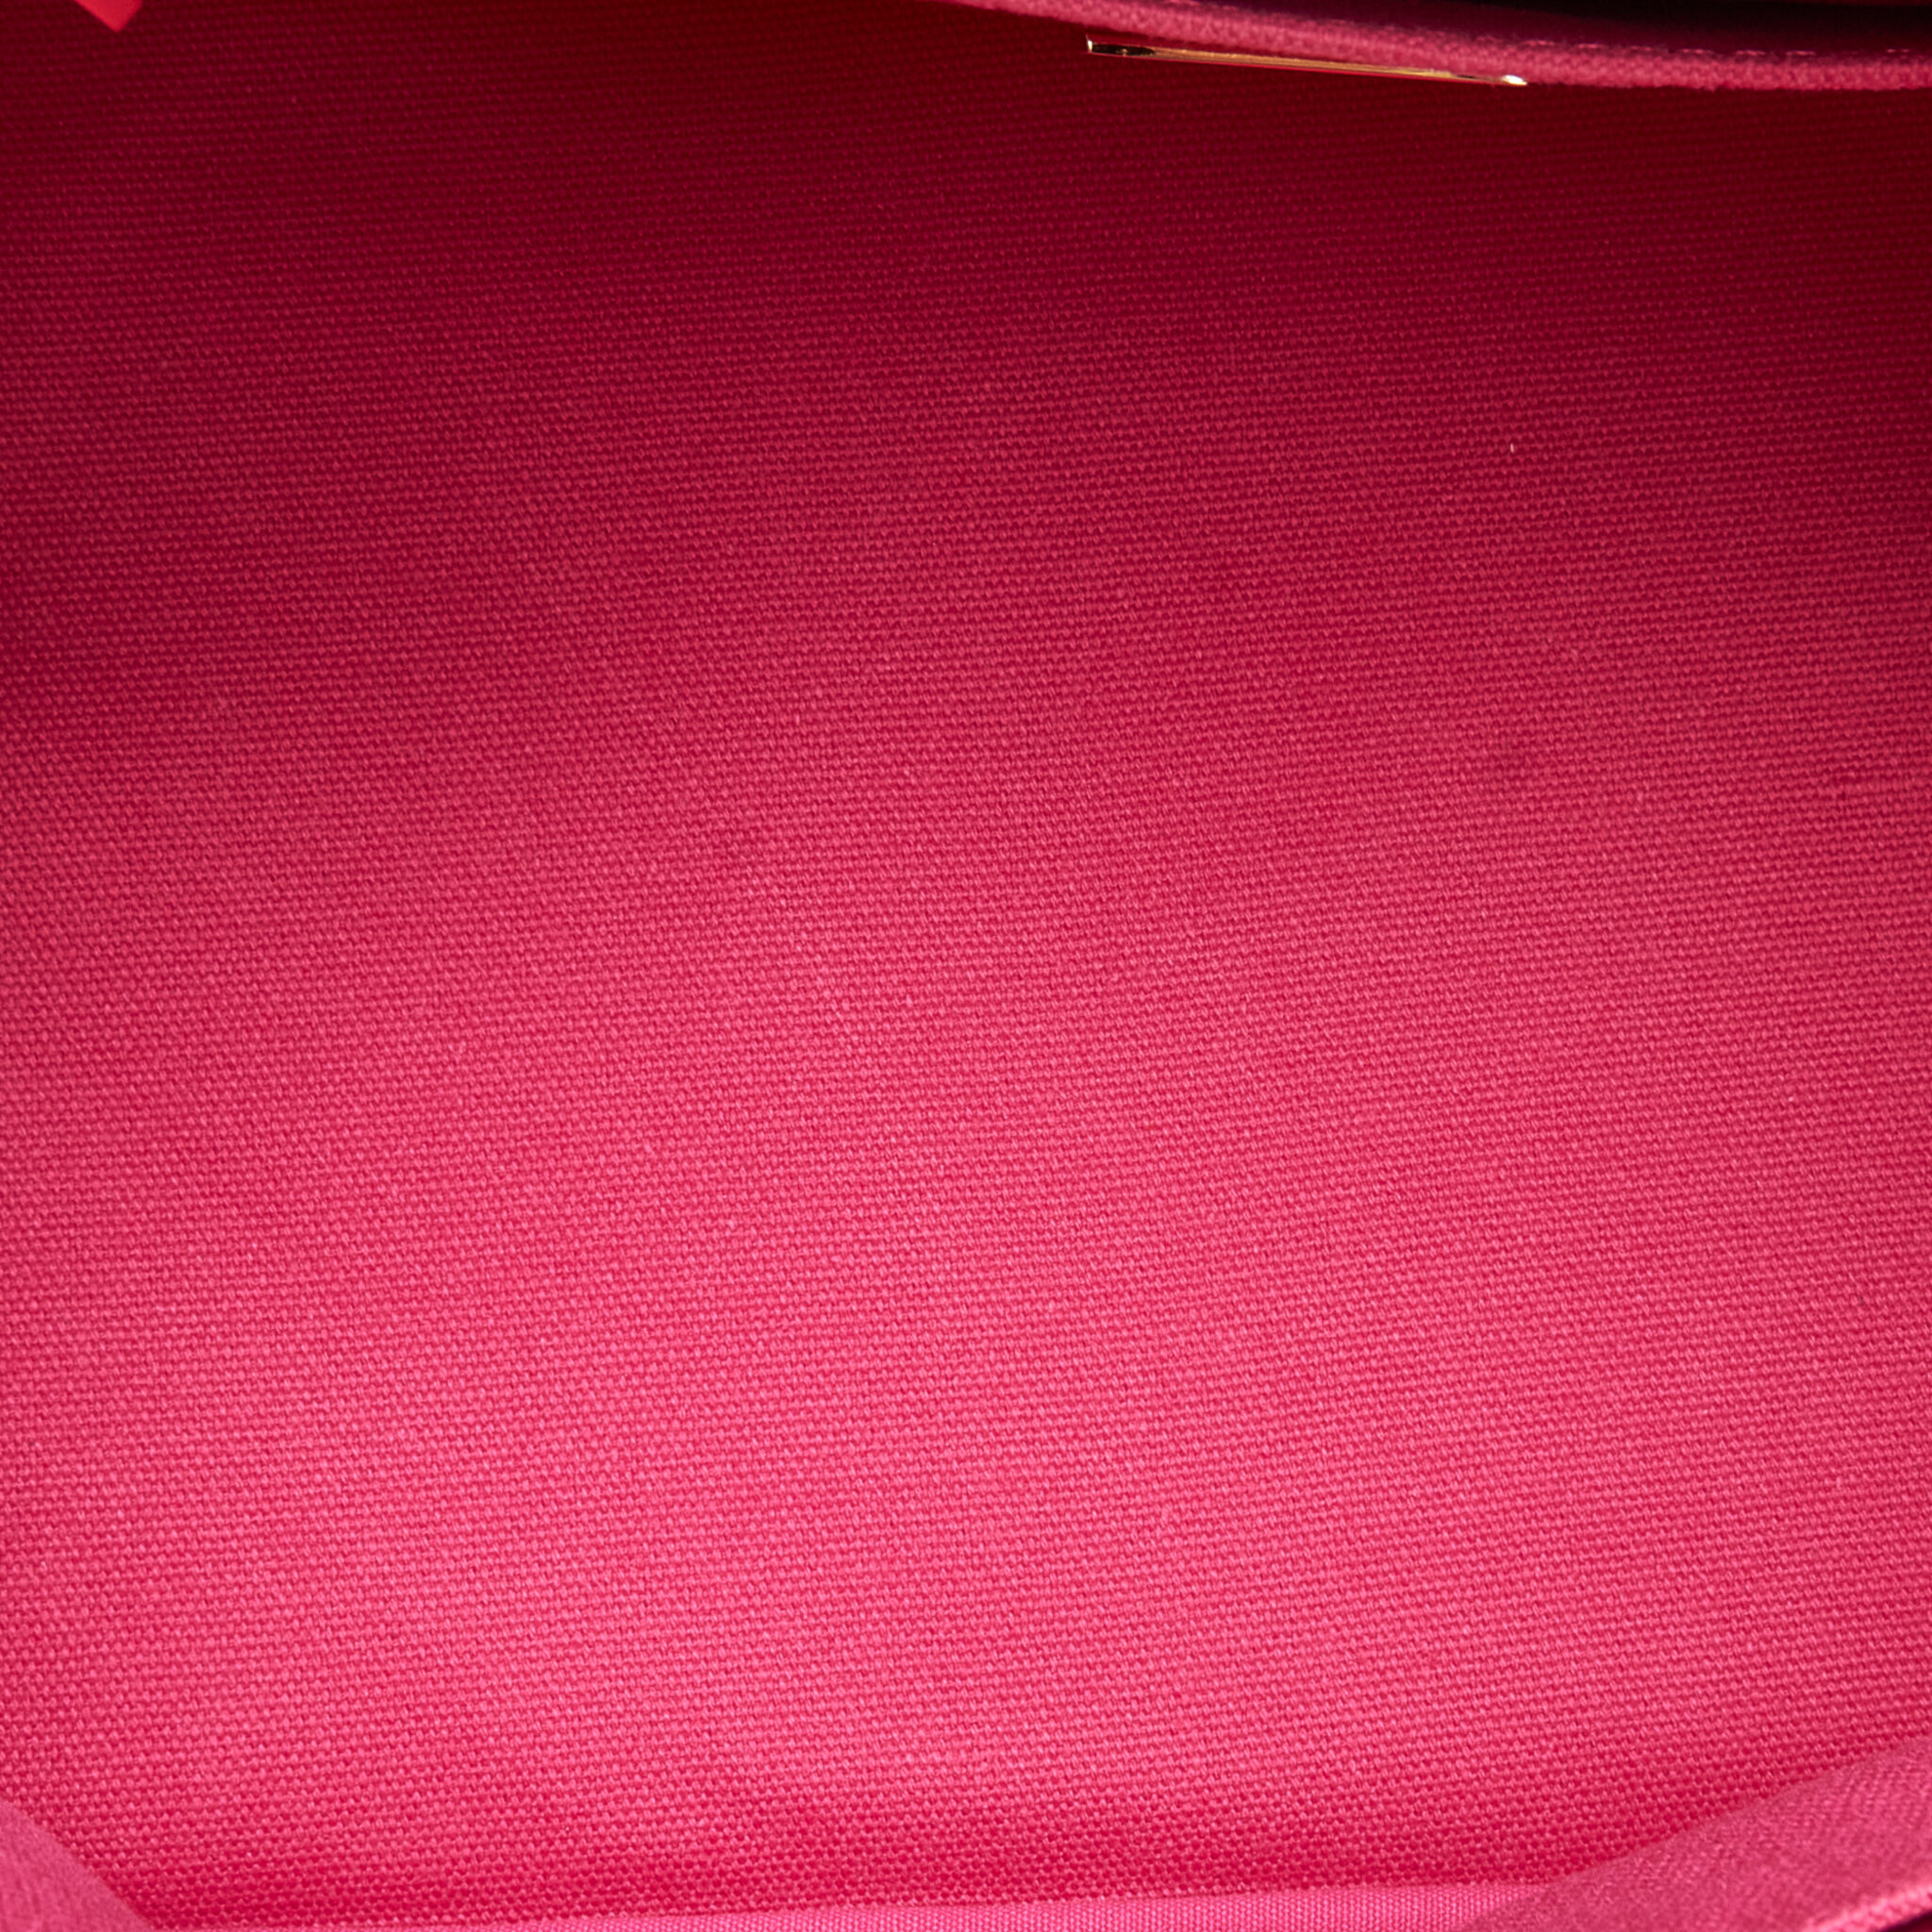 Prada Canapa Logo Canvas Handbag, ONESIZE, pink